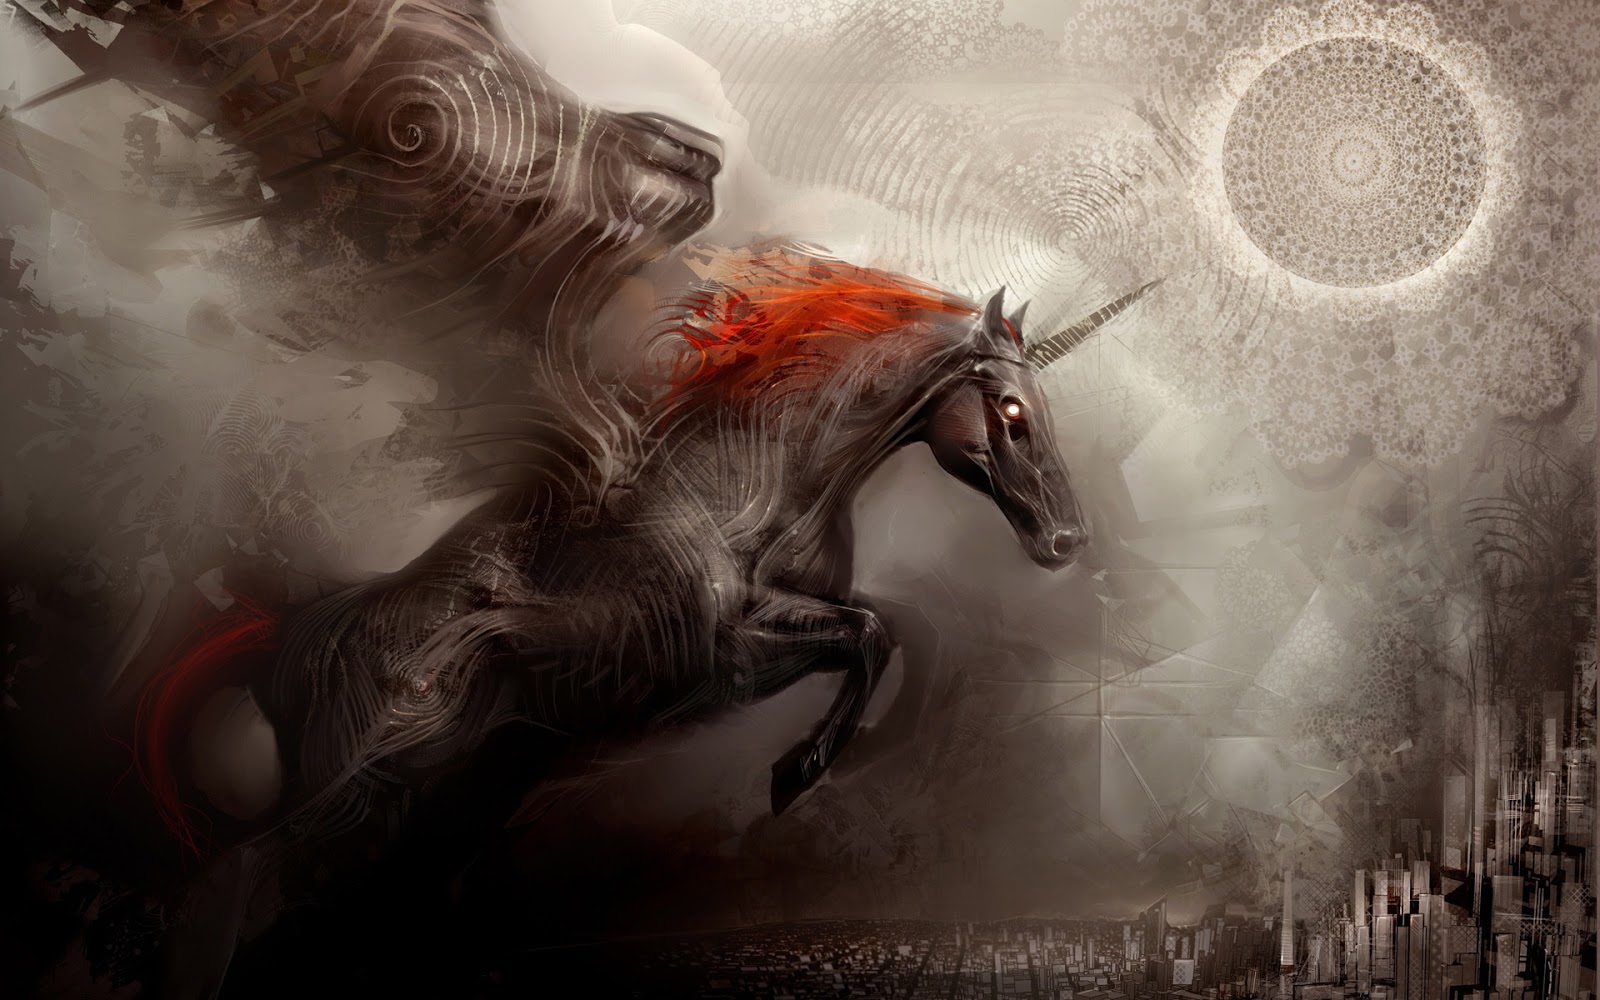 unicorn wallpaper hd,cg artwork,fictional character,mythical creature,mythology,illustration